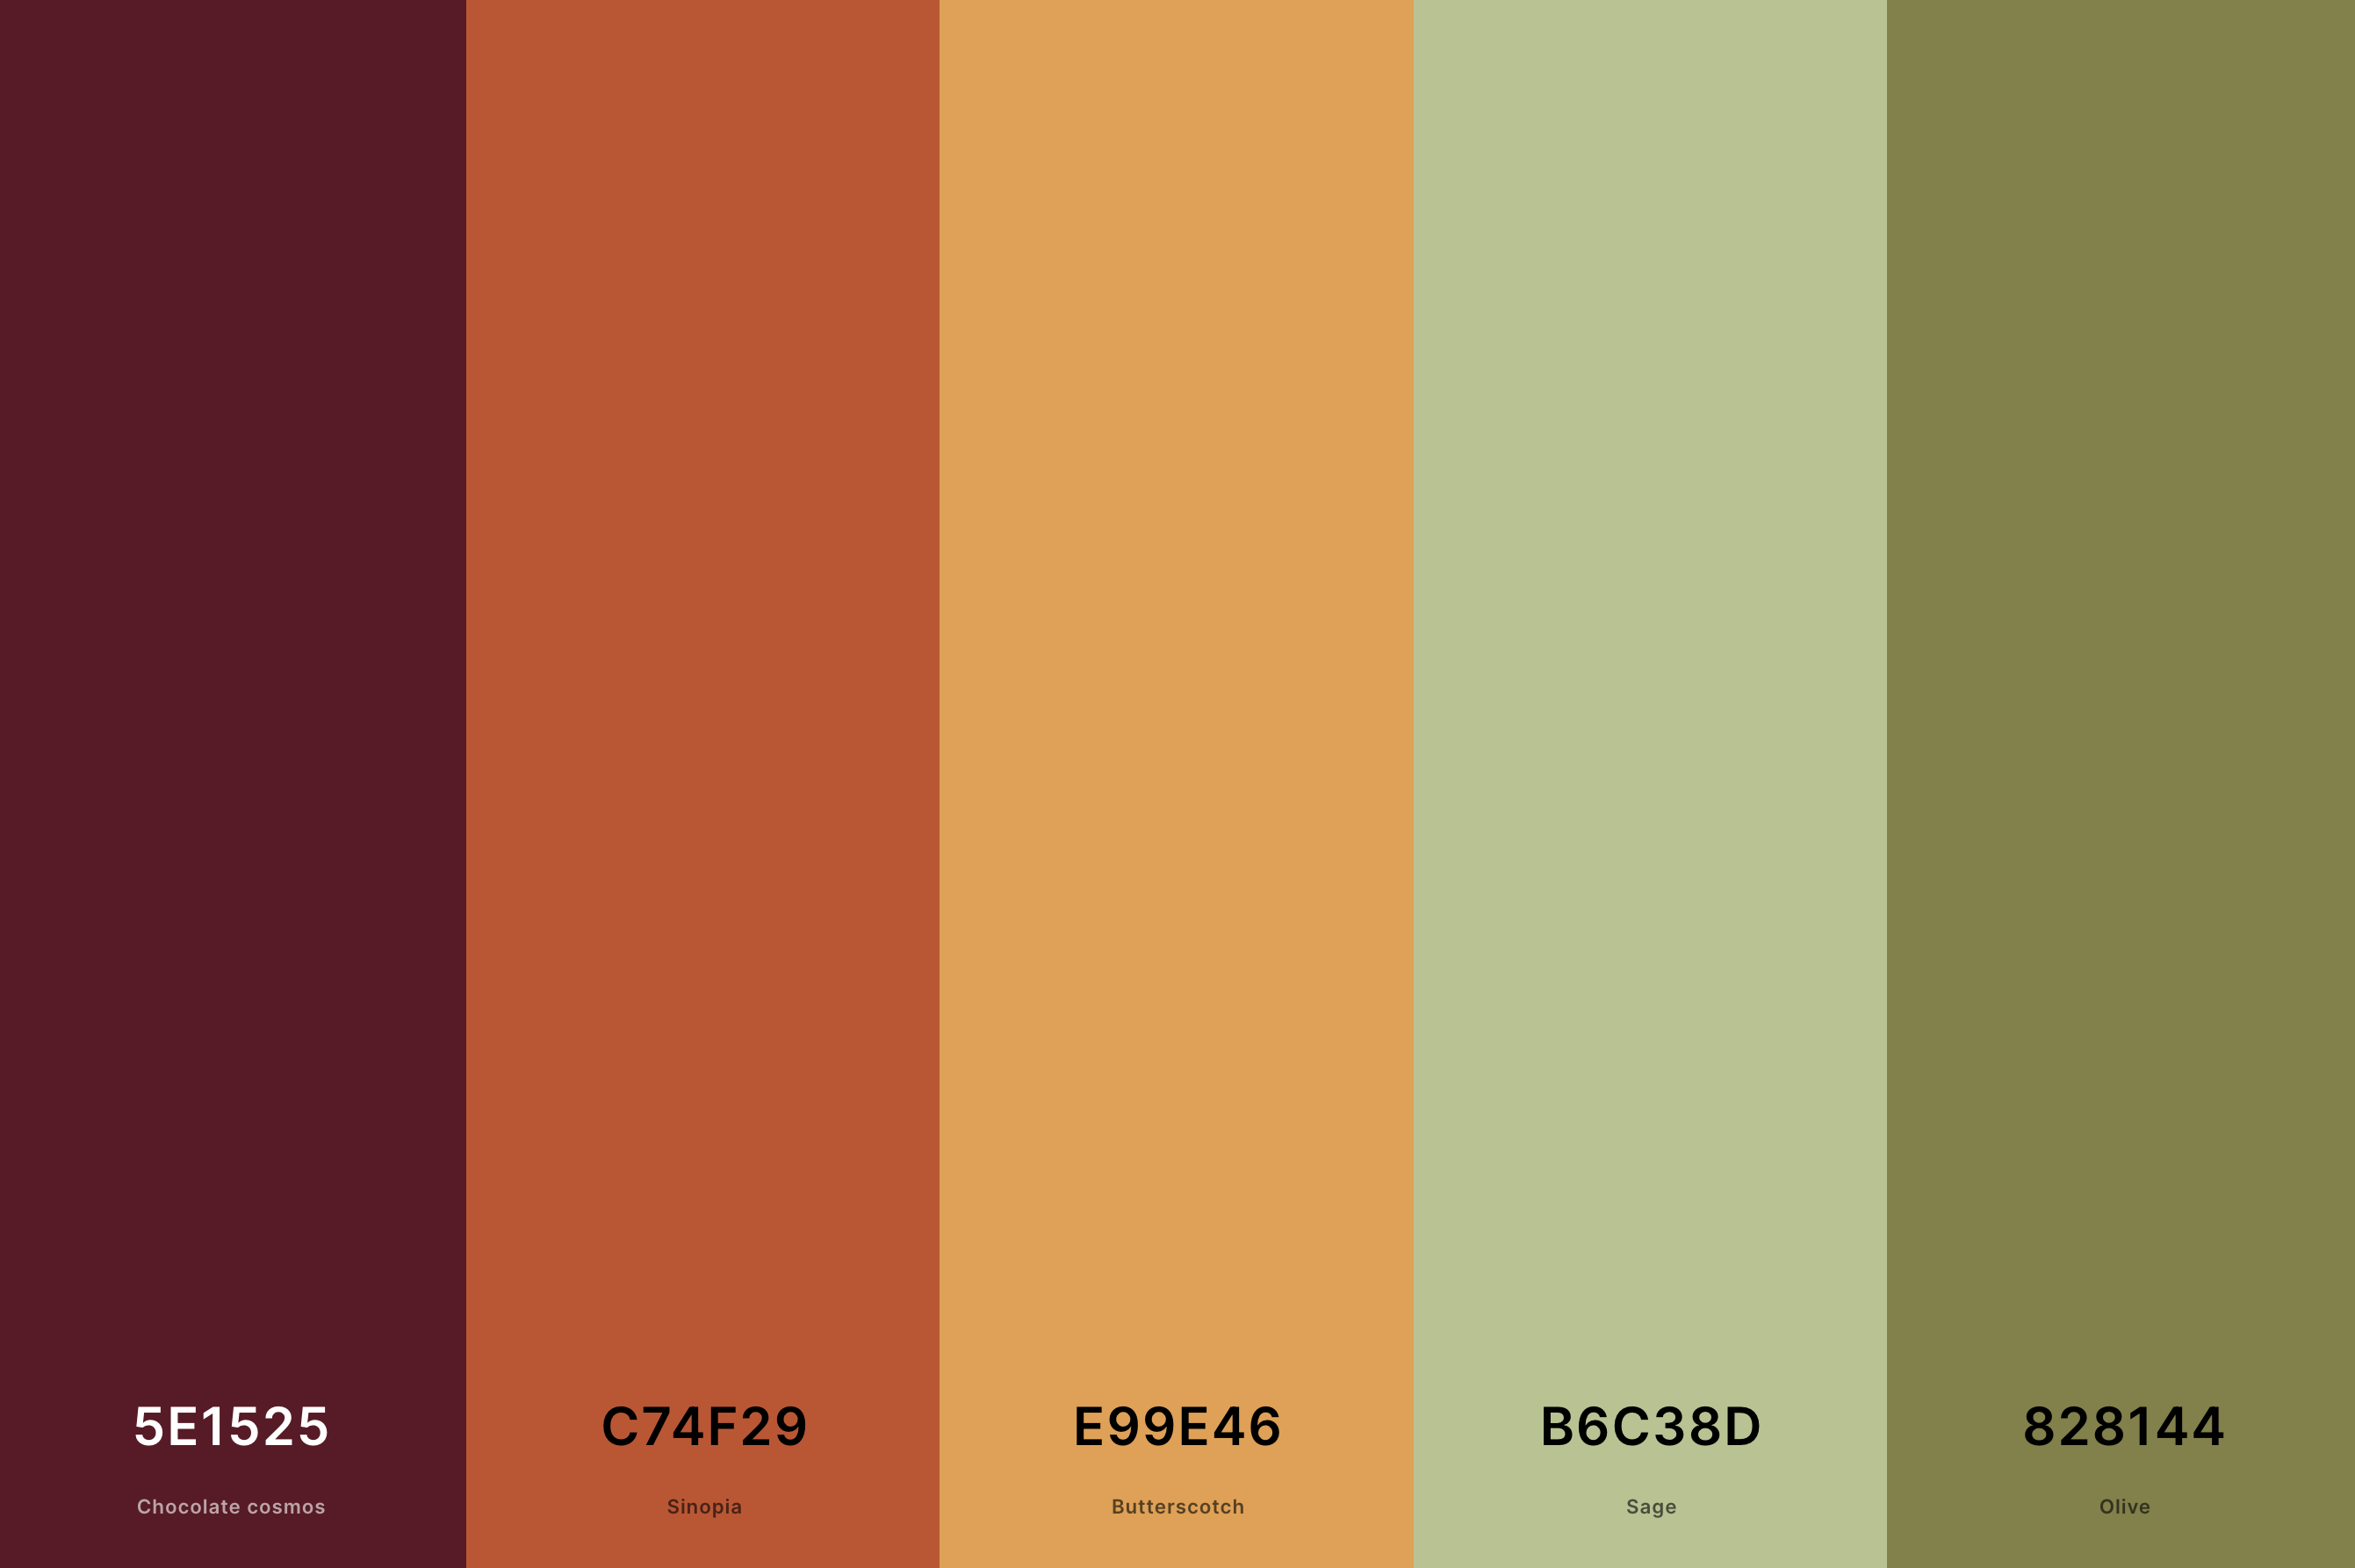 21. Aesthetic Autumn Color Palette Color Palette with Chocolate Cosmos (Hex #5E1525) + Sinopia (Hex #C74F29) + Butterscotch (Hex #E99E46) + Sage (Hex #B6C38D) + Olive (Hex #828144) Color Palette with Hex Codes